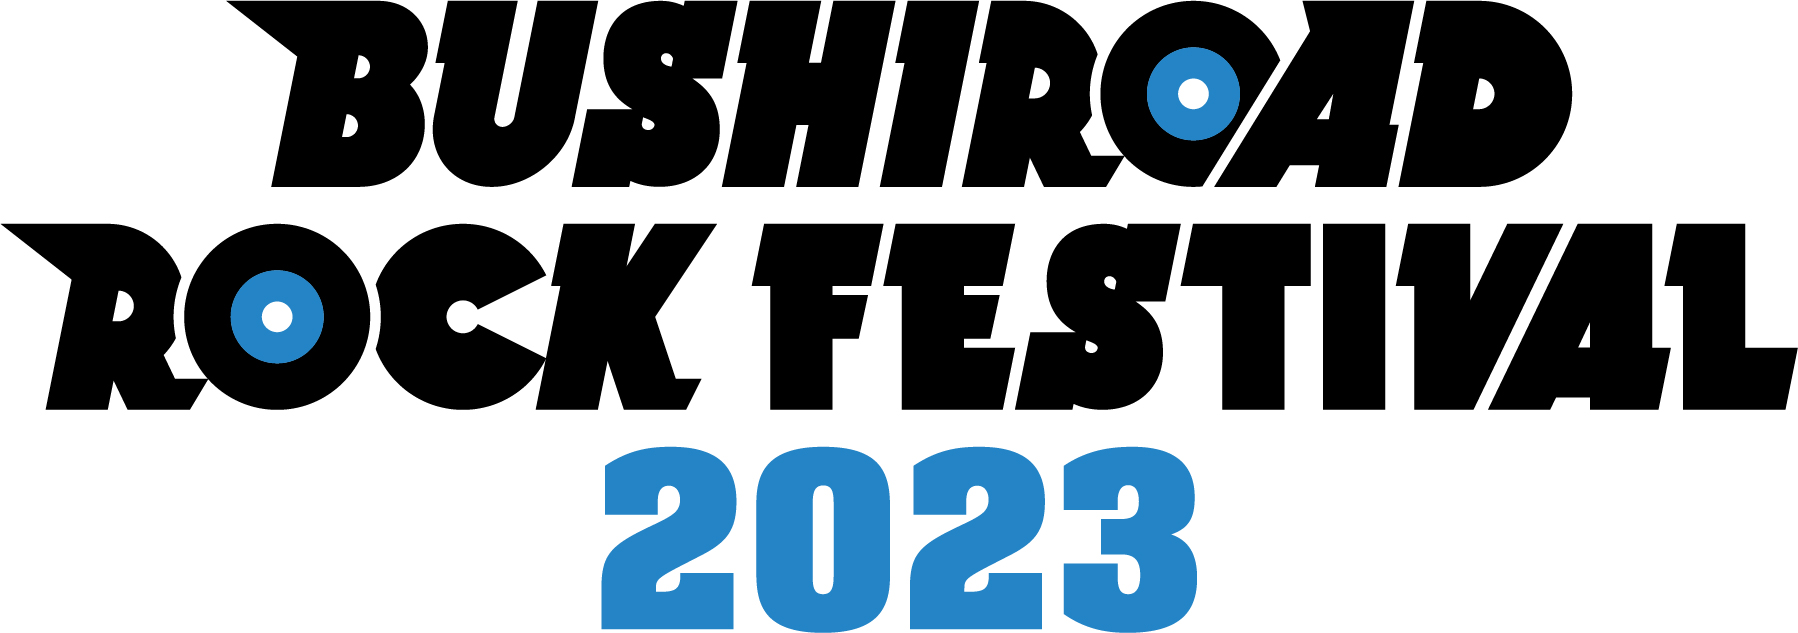 [Streaming+] BUSHIROAD ROCK FESTIVAL 2023